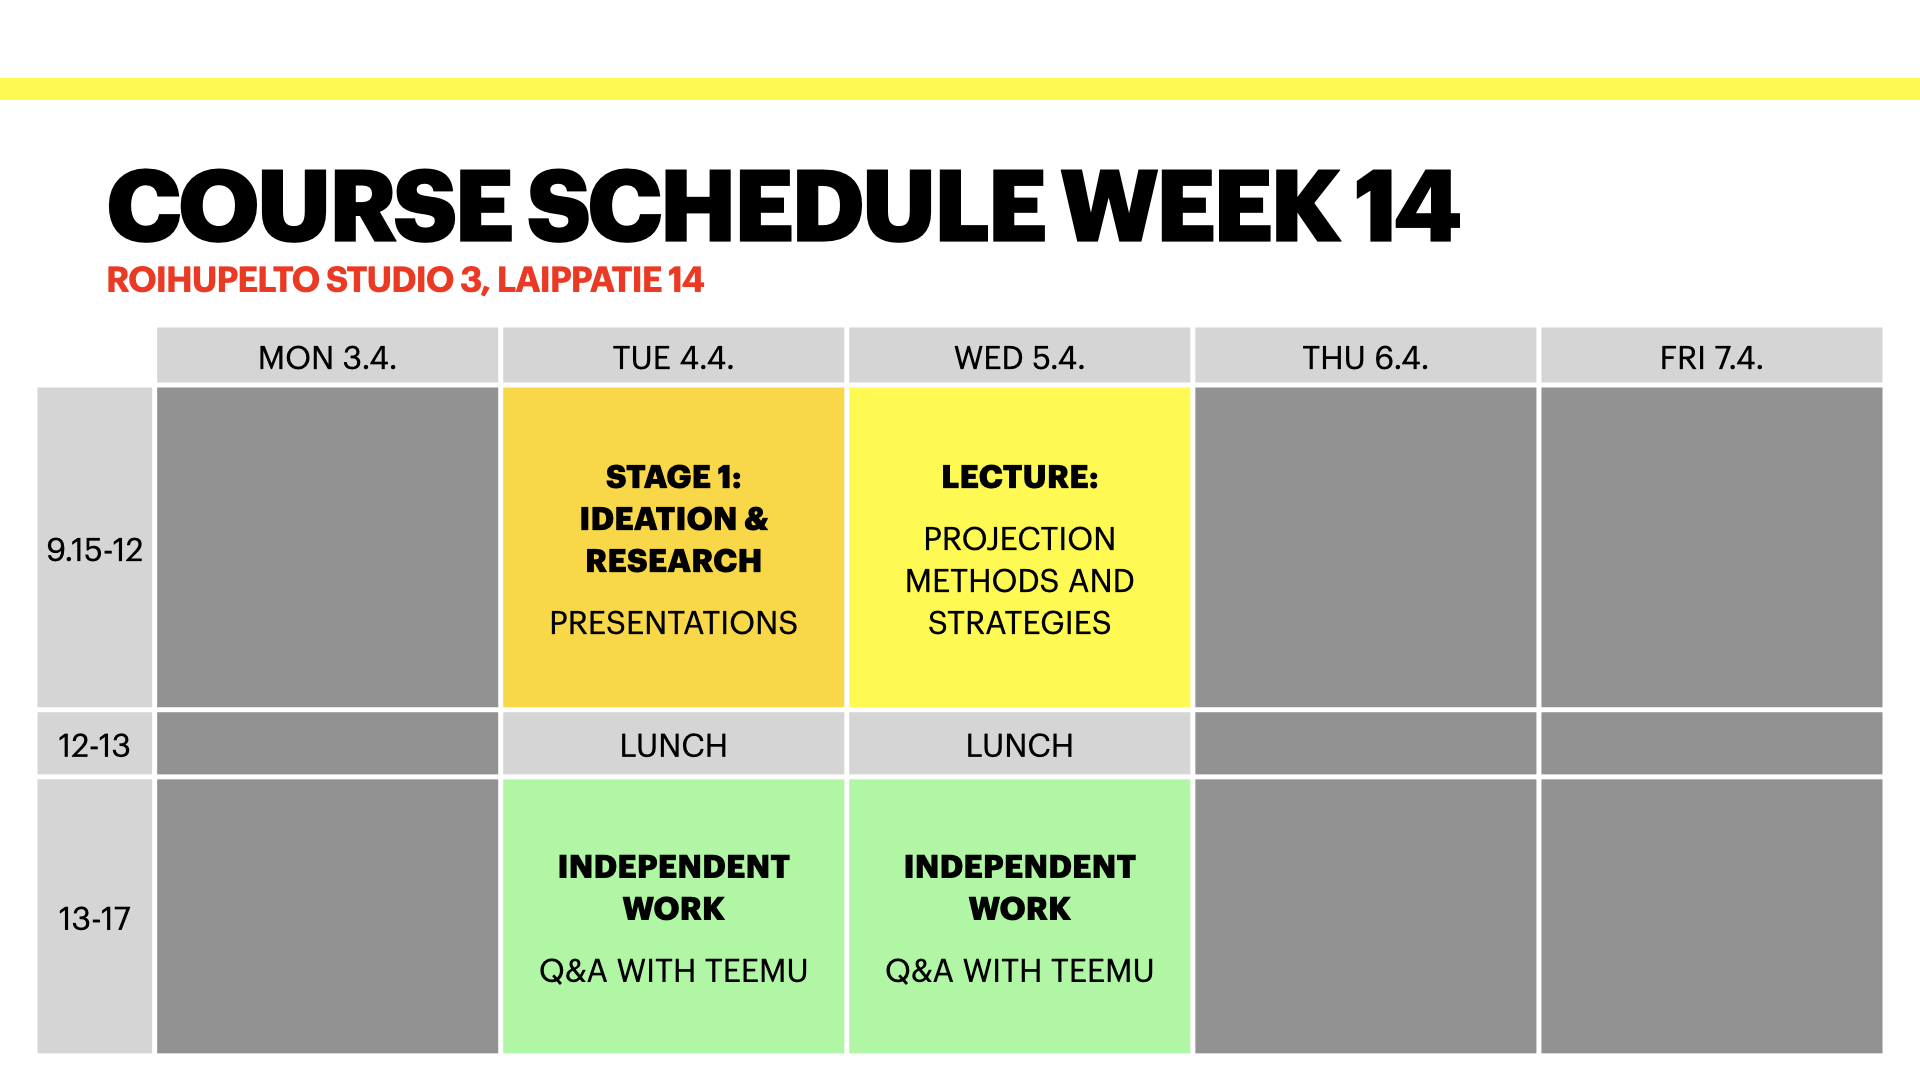 Course schedule week 14